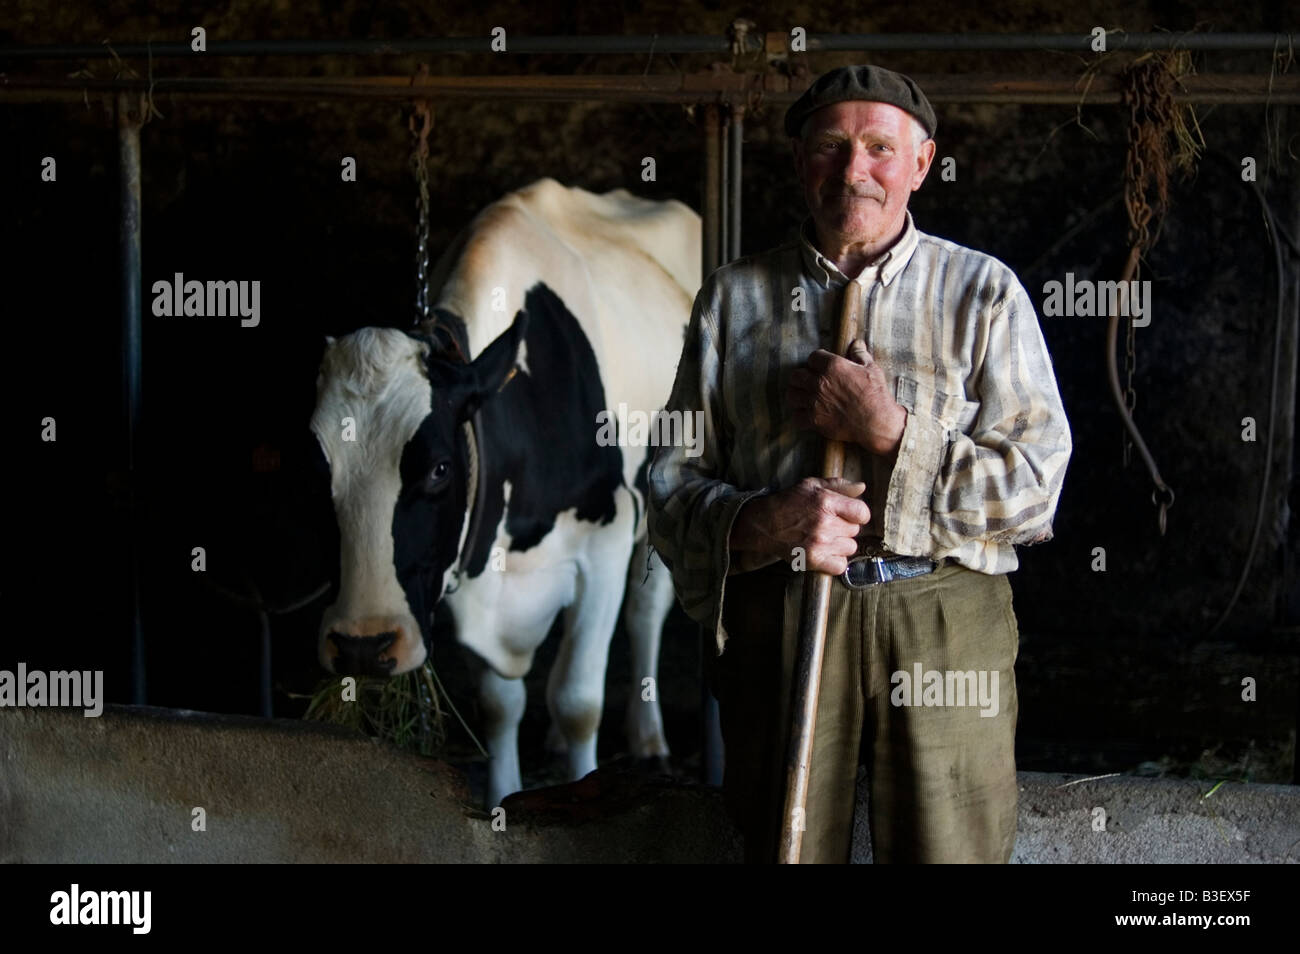 Farmer in the village of Olveiroa WAY OF SAINT JAMES or CAMINO DE SANTIAGO - GALICIA region SPAIN Stock Photo